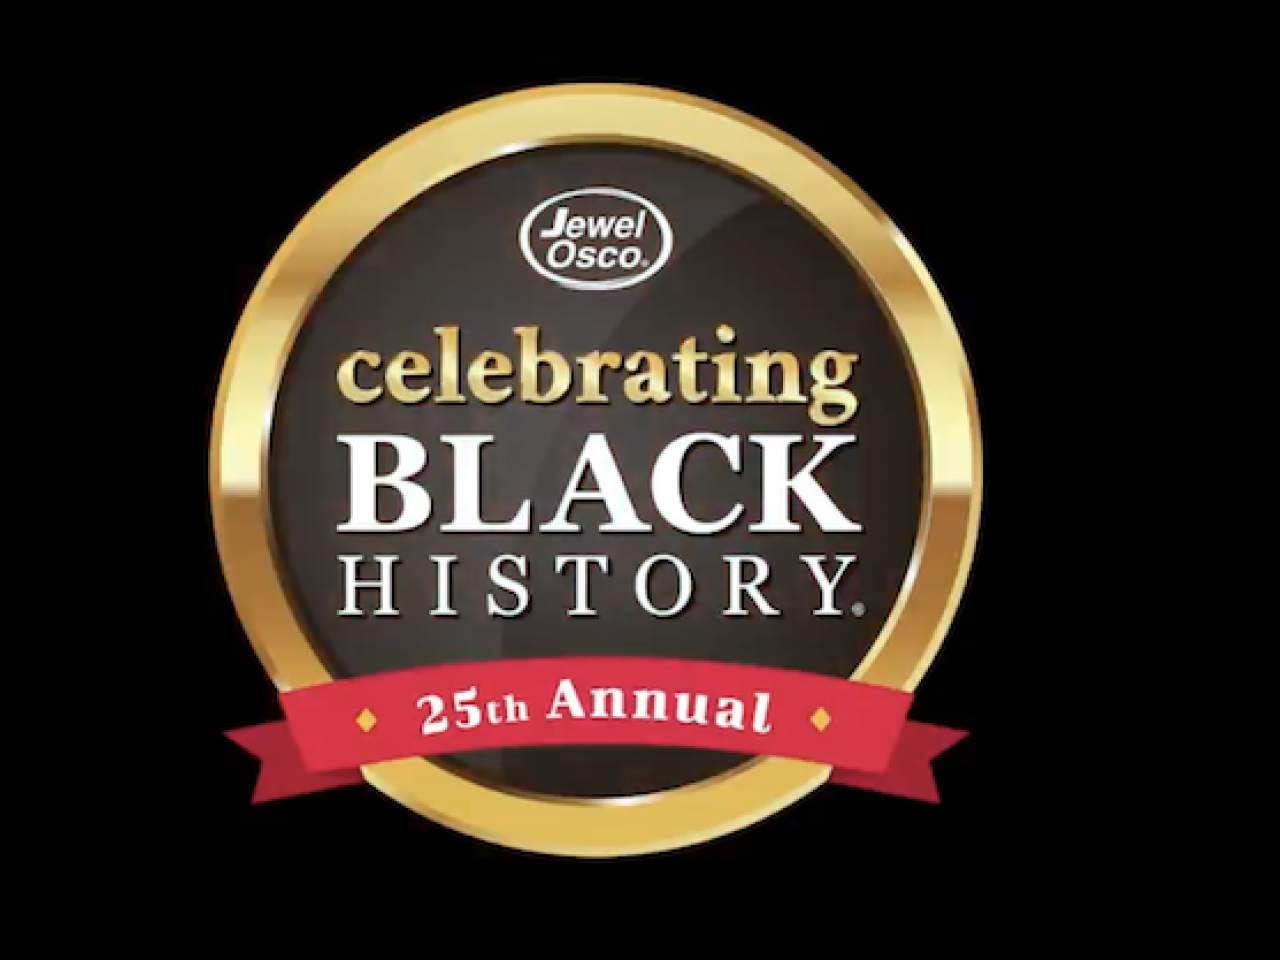 Jewel Osco: Celebrating Black History.